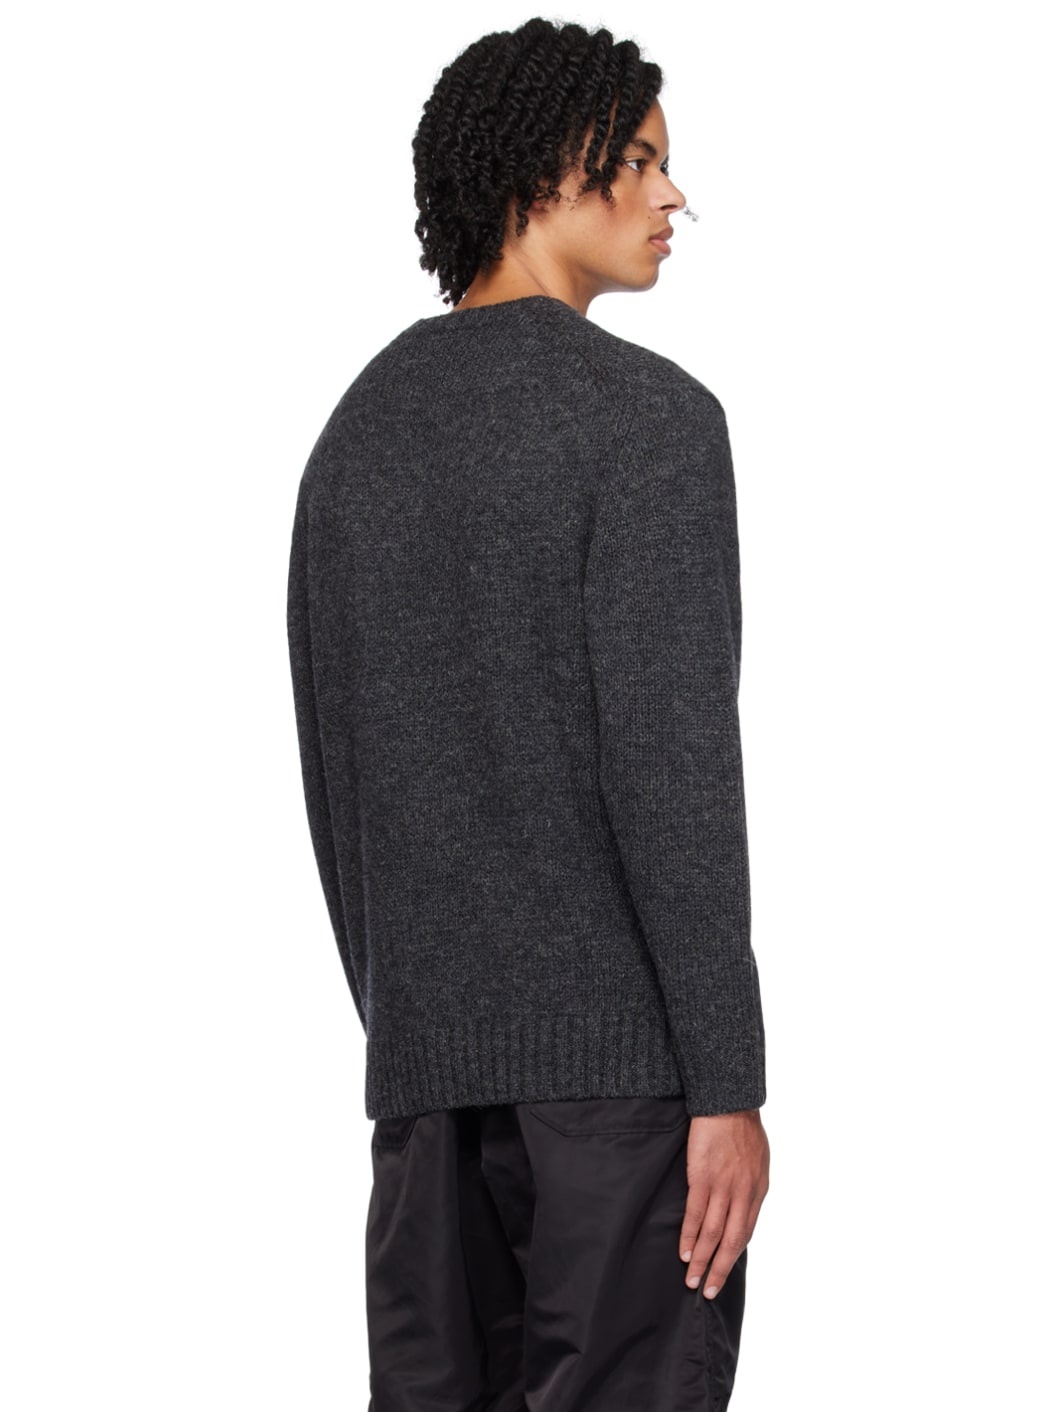 Gray Intarsia Sweater - 3